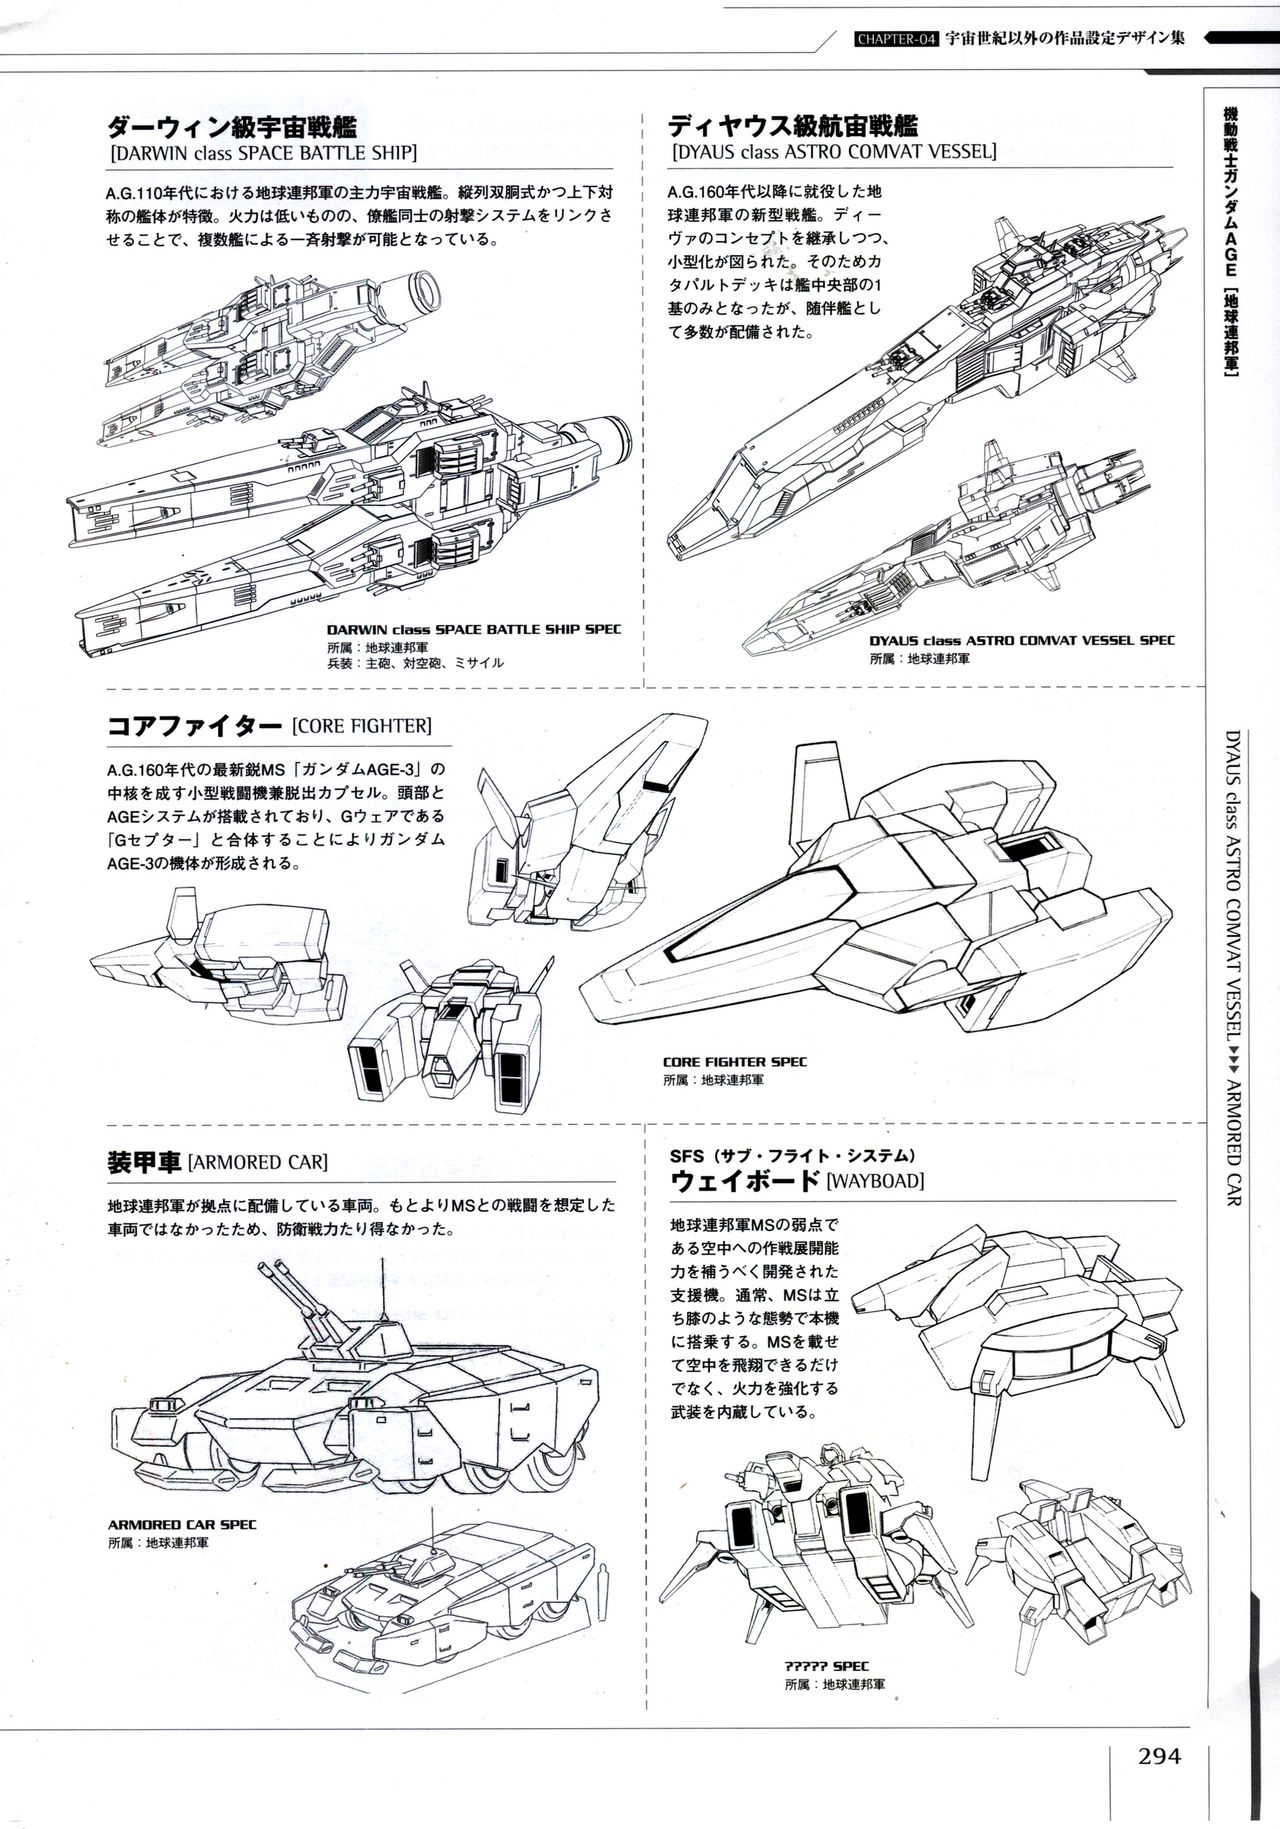 Mobile Suit Gundam - Ship & Aerospace Plane Encyclopedia - Revised Edition 299